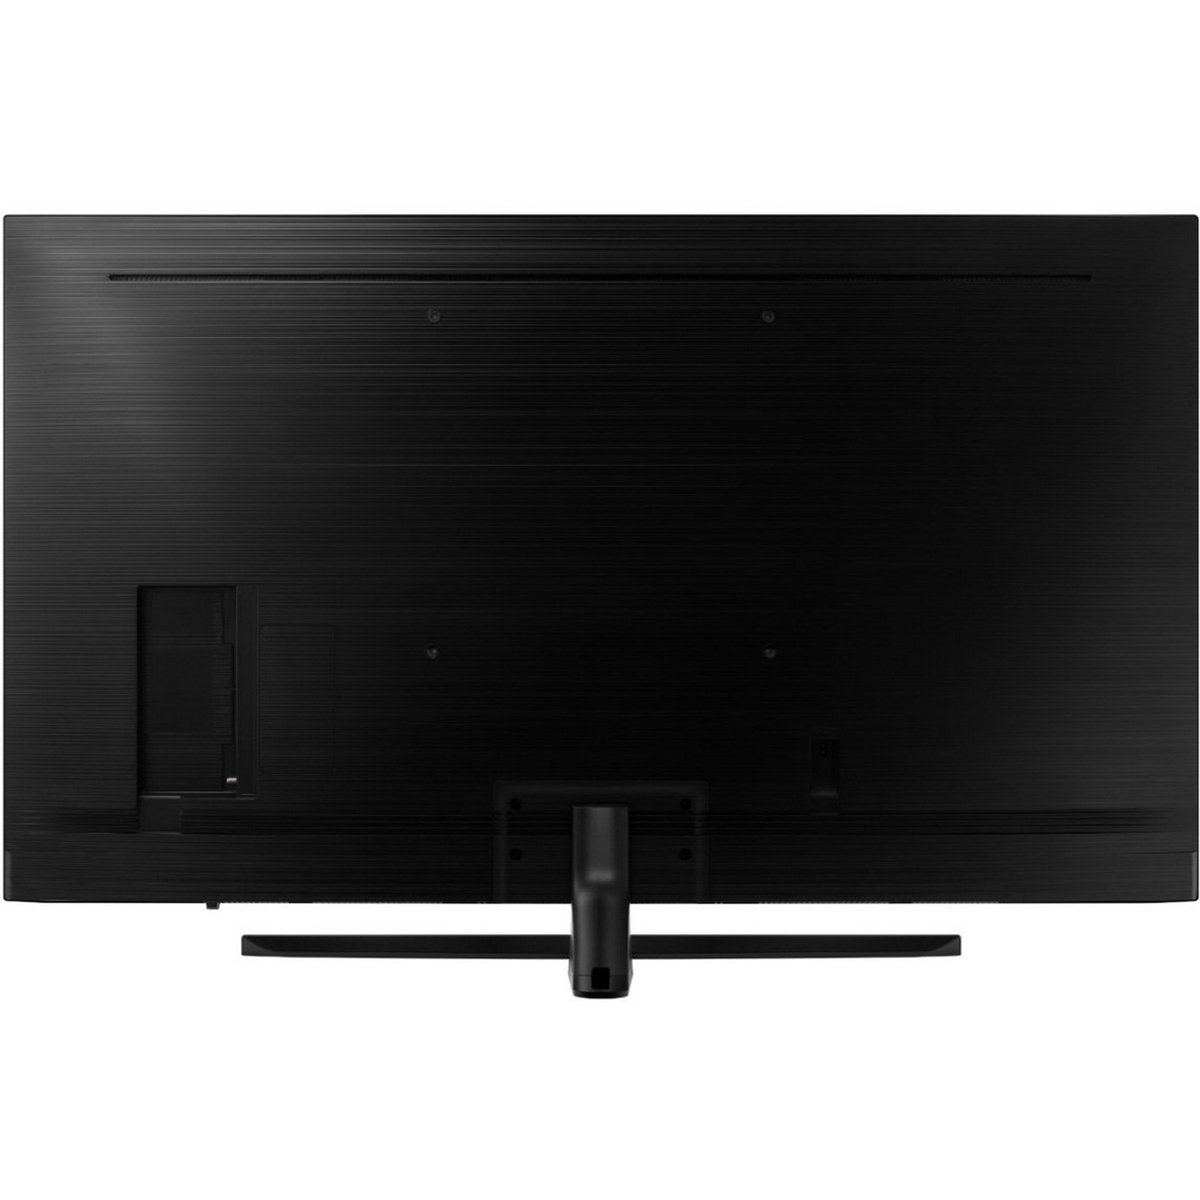 Samsung Premium Ultra HD 4K Smart LED TV UA55NU8000 55inch